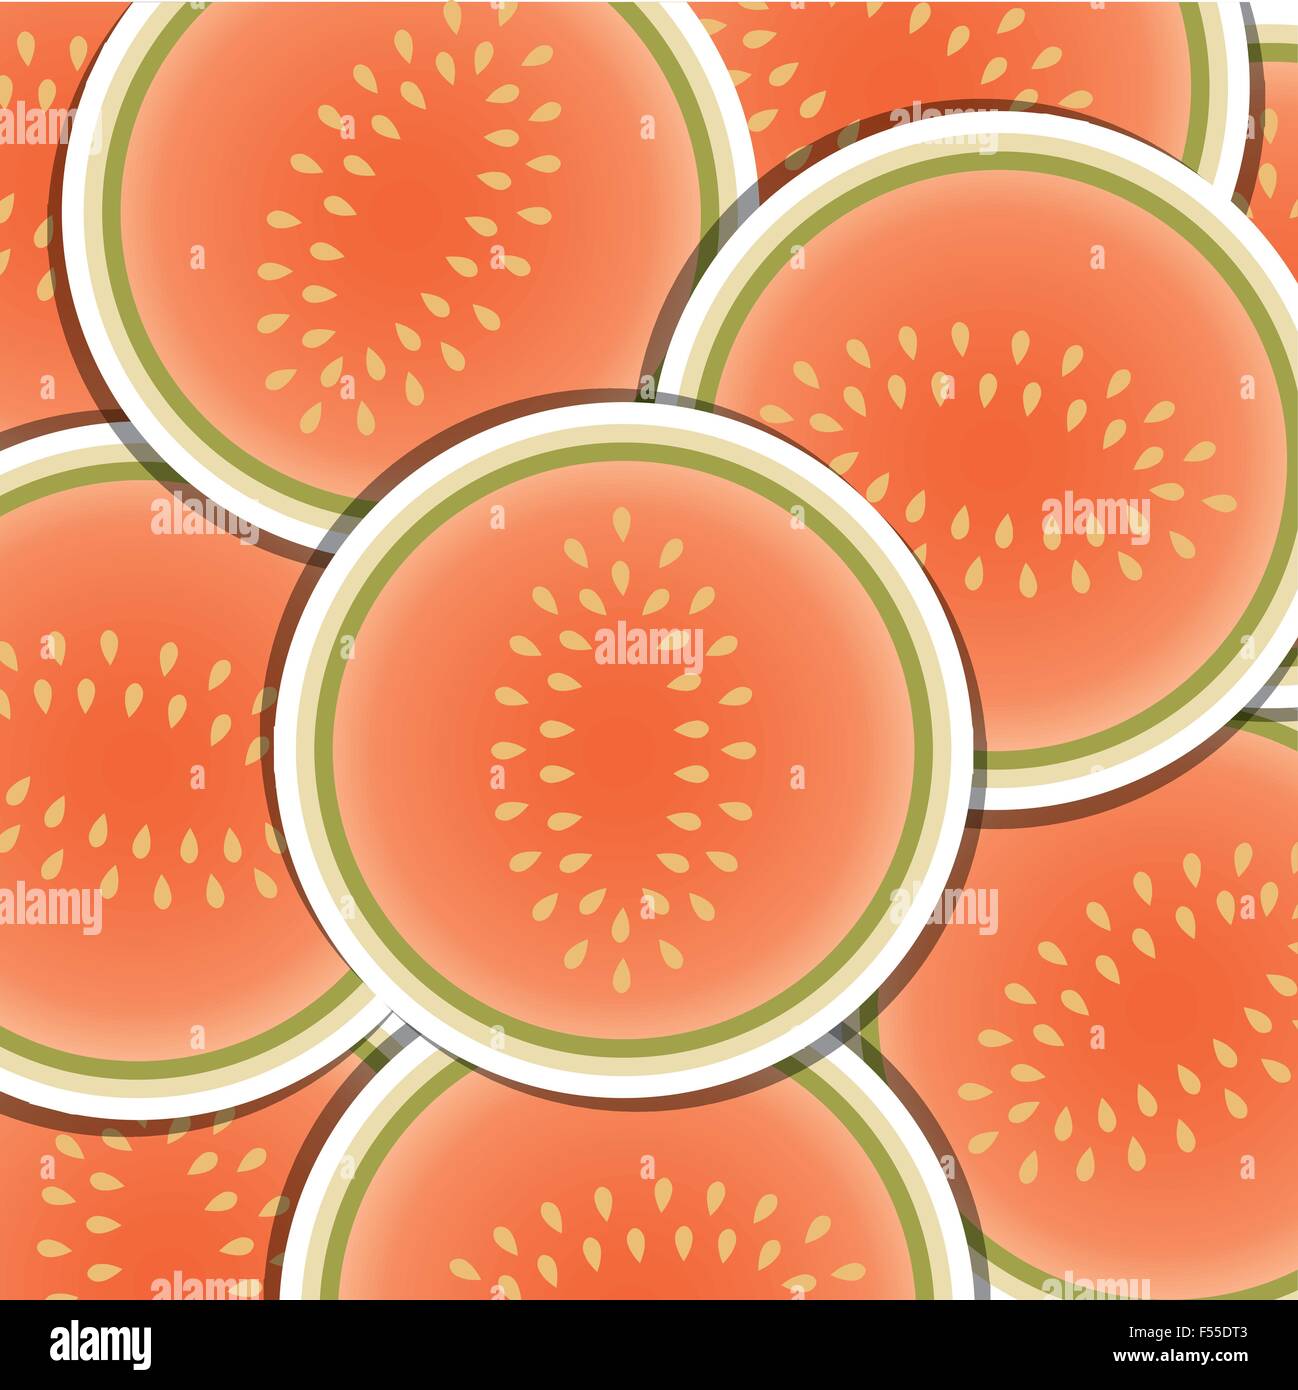 Melon slice background/card in vector format. Stock Vector